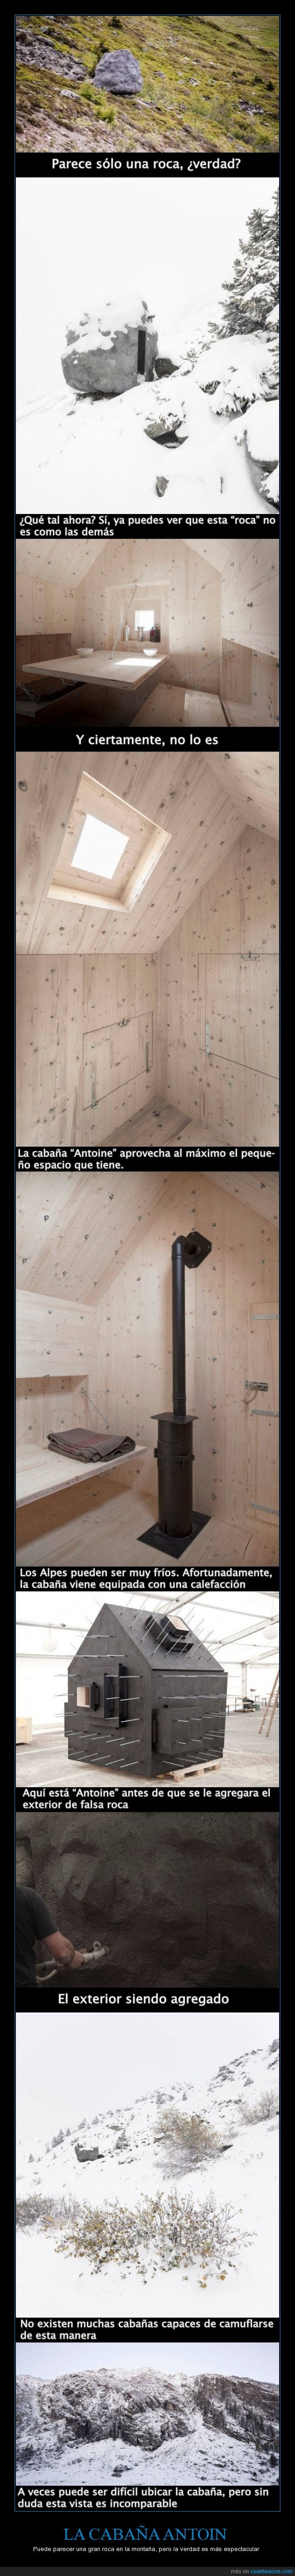 asombroso,La cabaña Antoine,roca,los Alpes,Bureau A.,calefacción,espectacular,camuflar,montaña